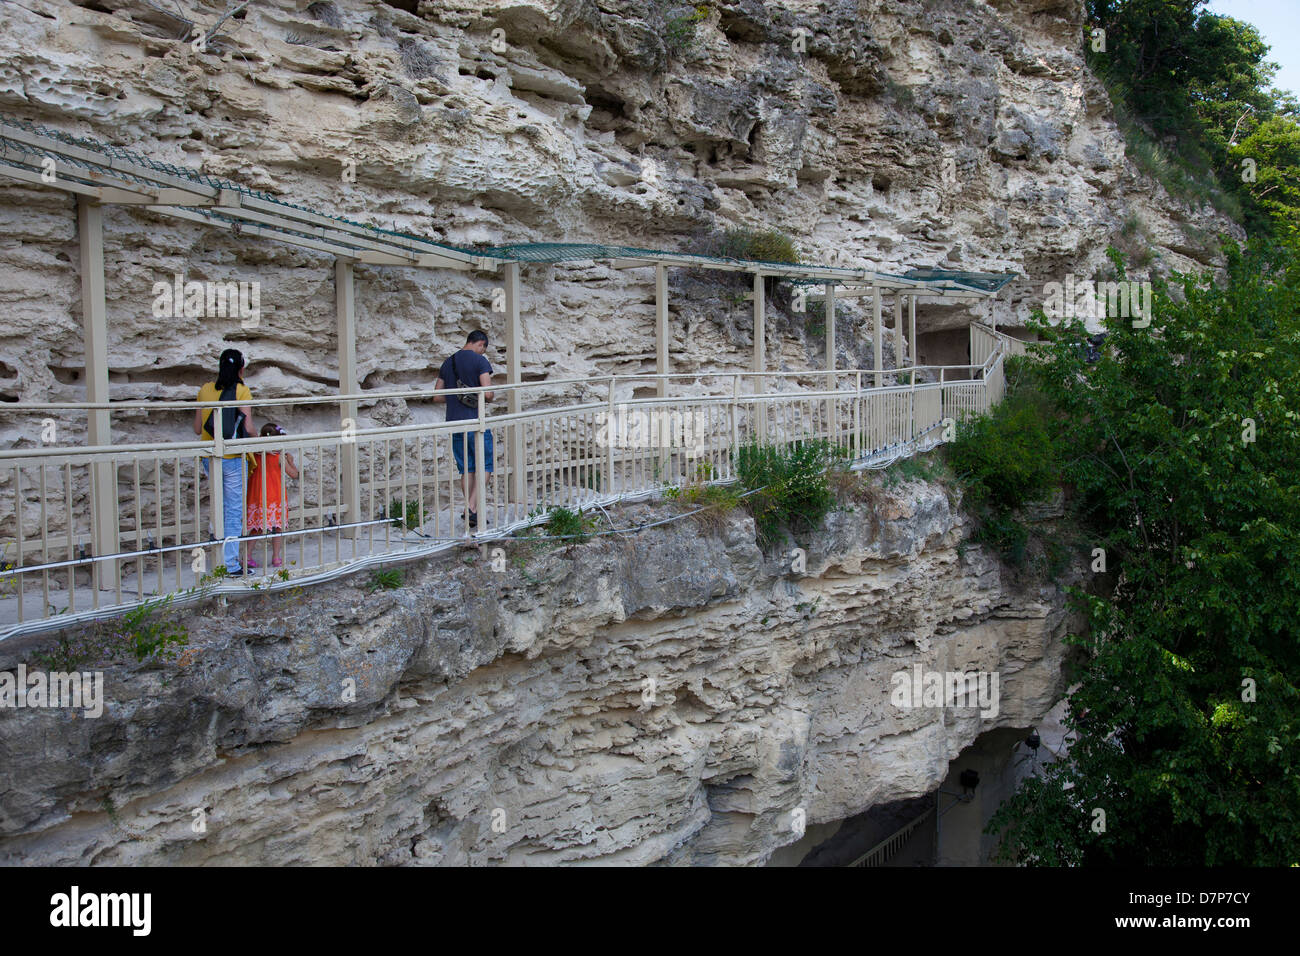 Bulgaria, Europe, Black Sea Coast, The 6th Century Aladzha Monastery cut into the Cliff, Sightseers. Stock Photo